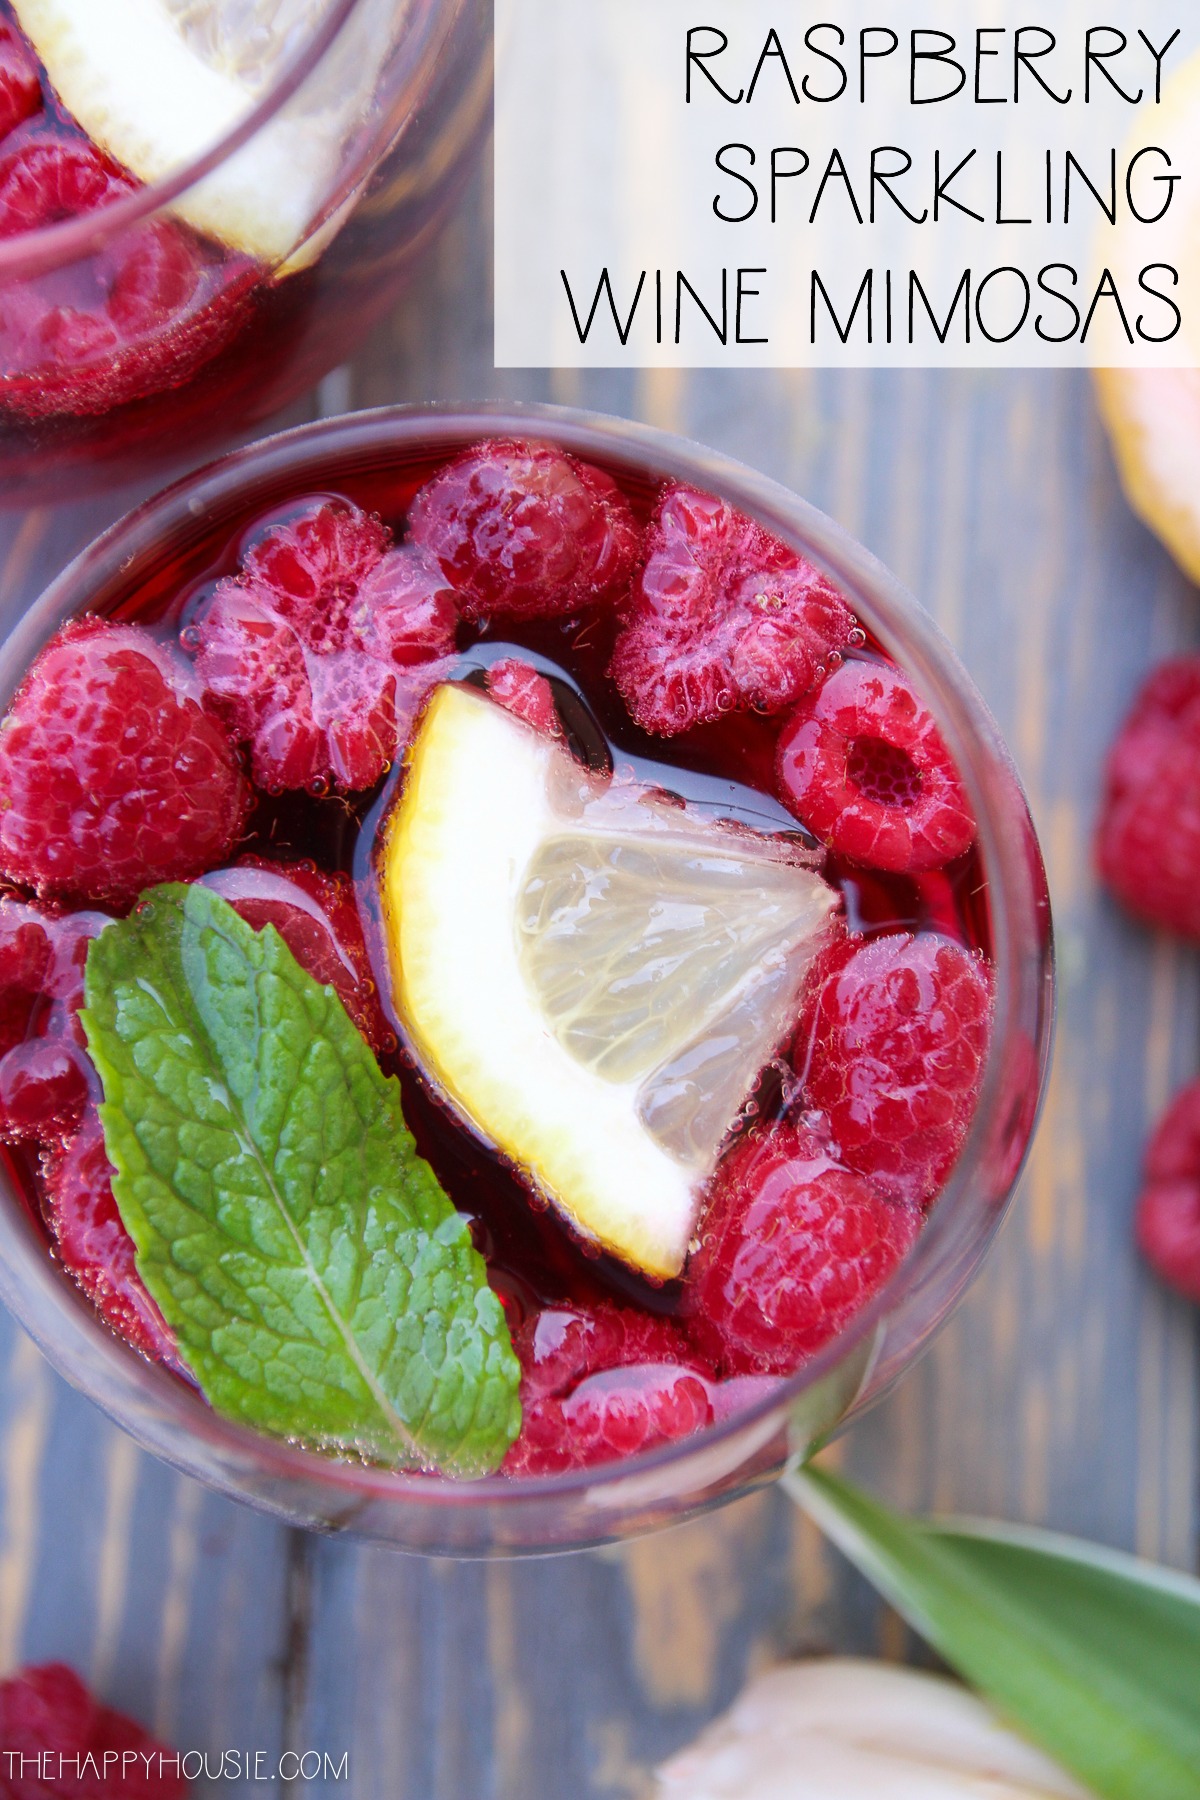 Raspberry sparkling wine mimosas graphic.